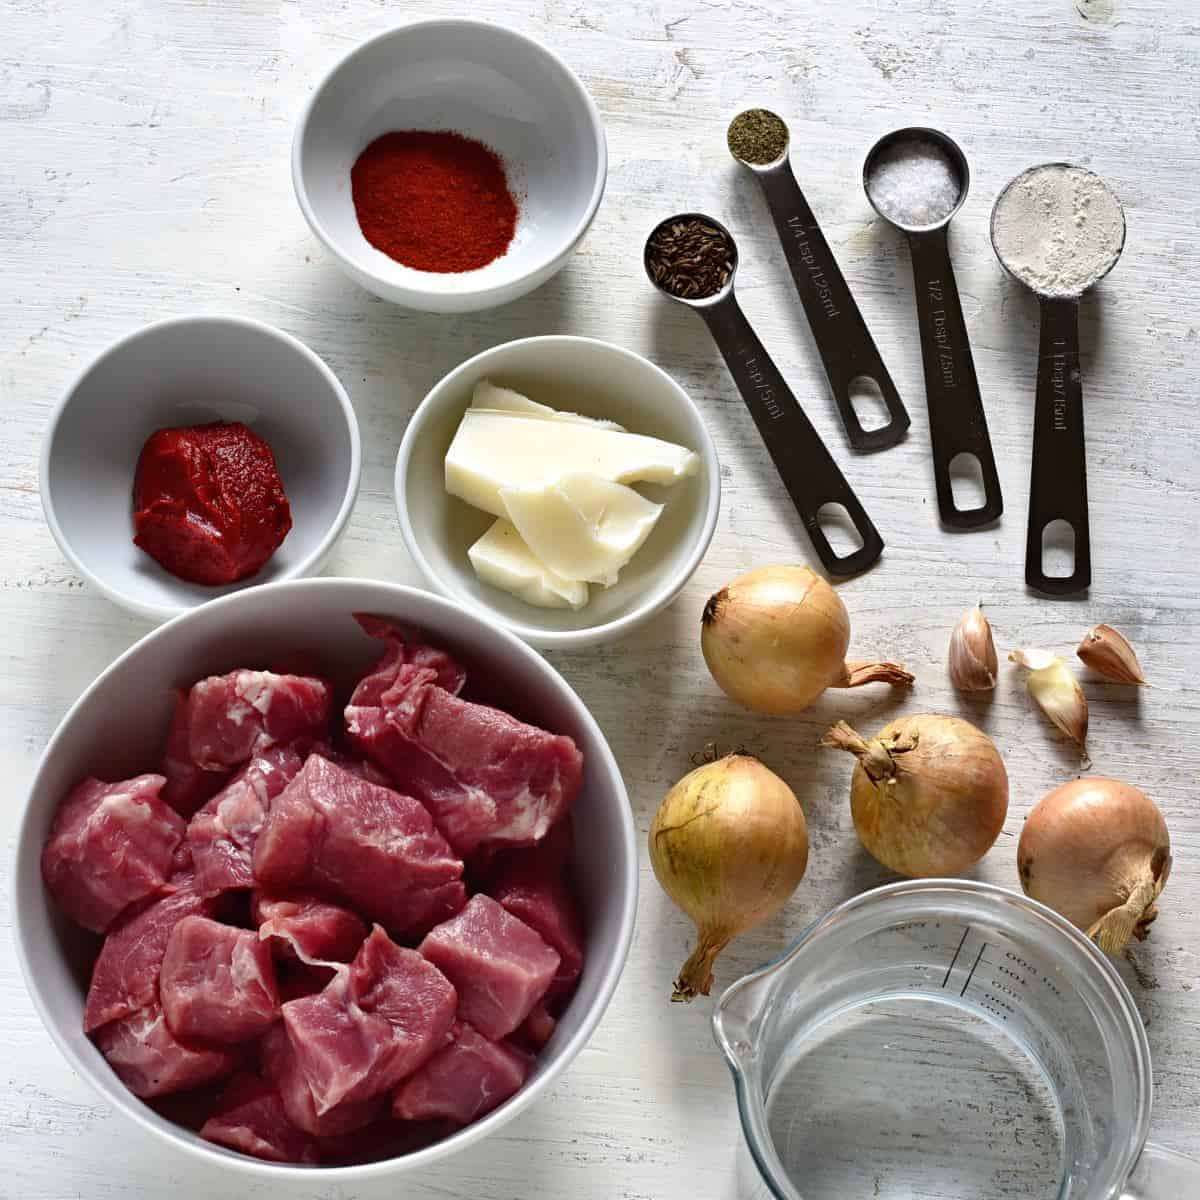 Czech pork goulash ingredients.